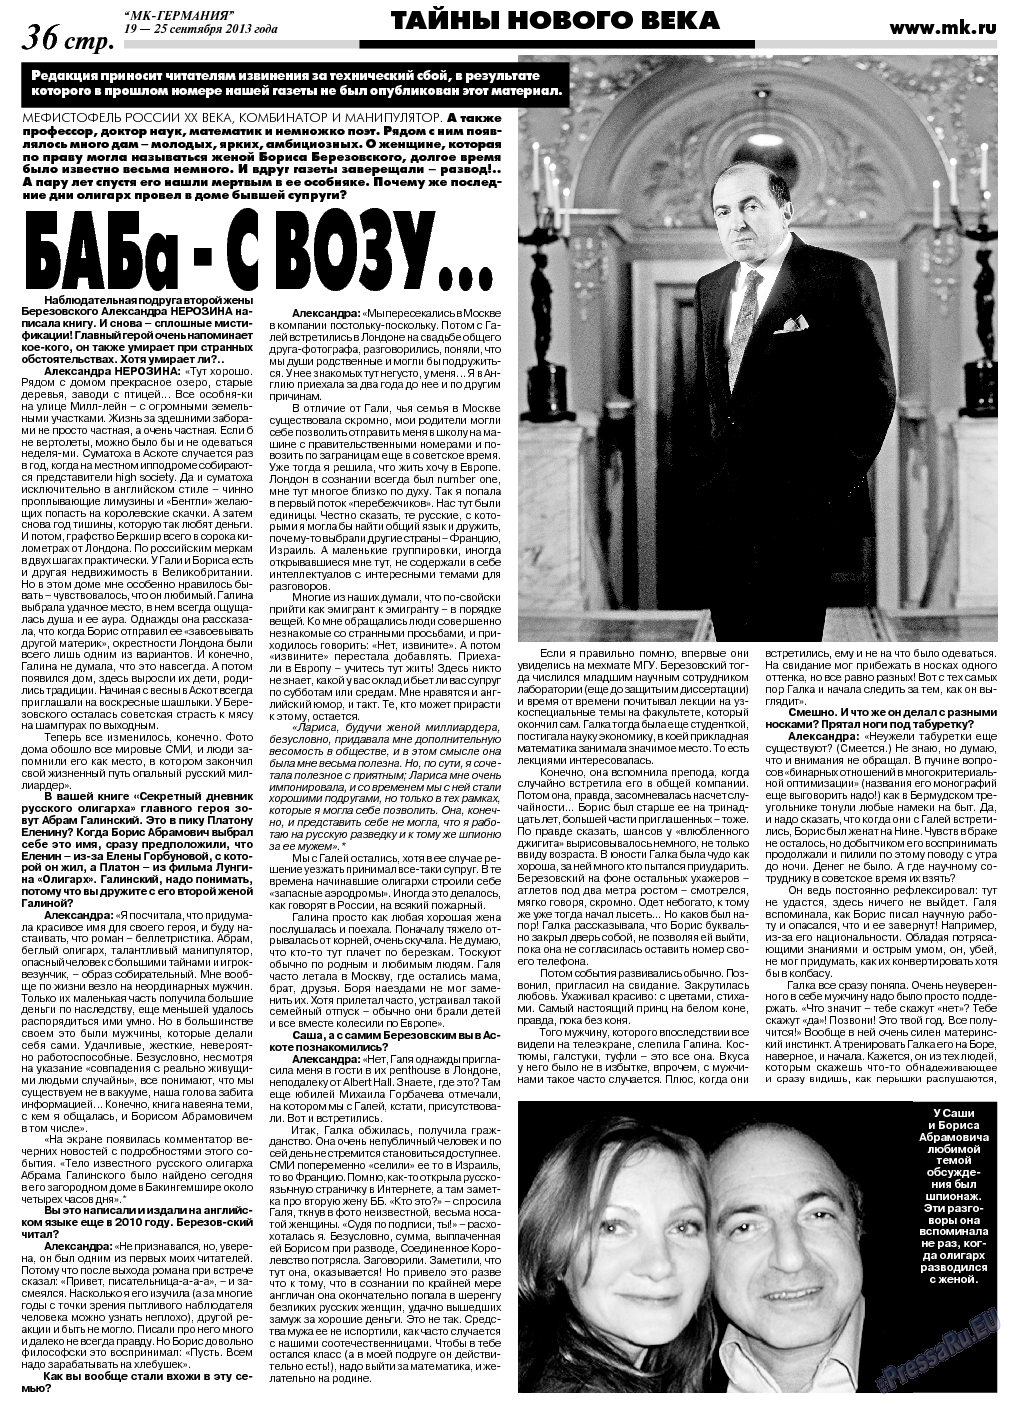 МК-Германия, газета. 2013 №38 стр.36